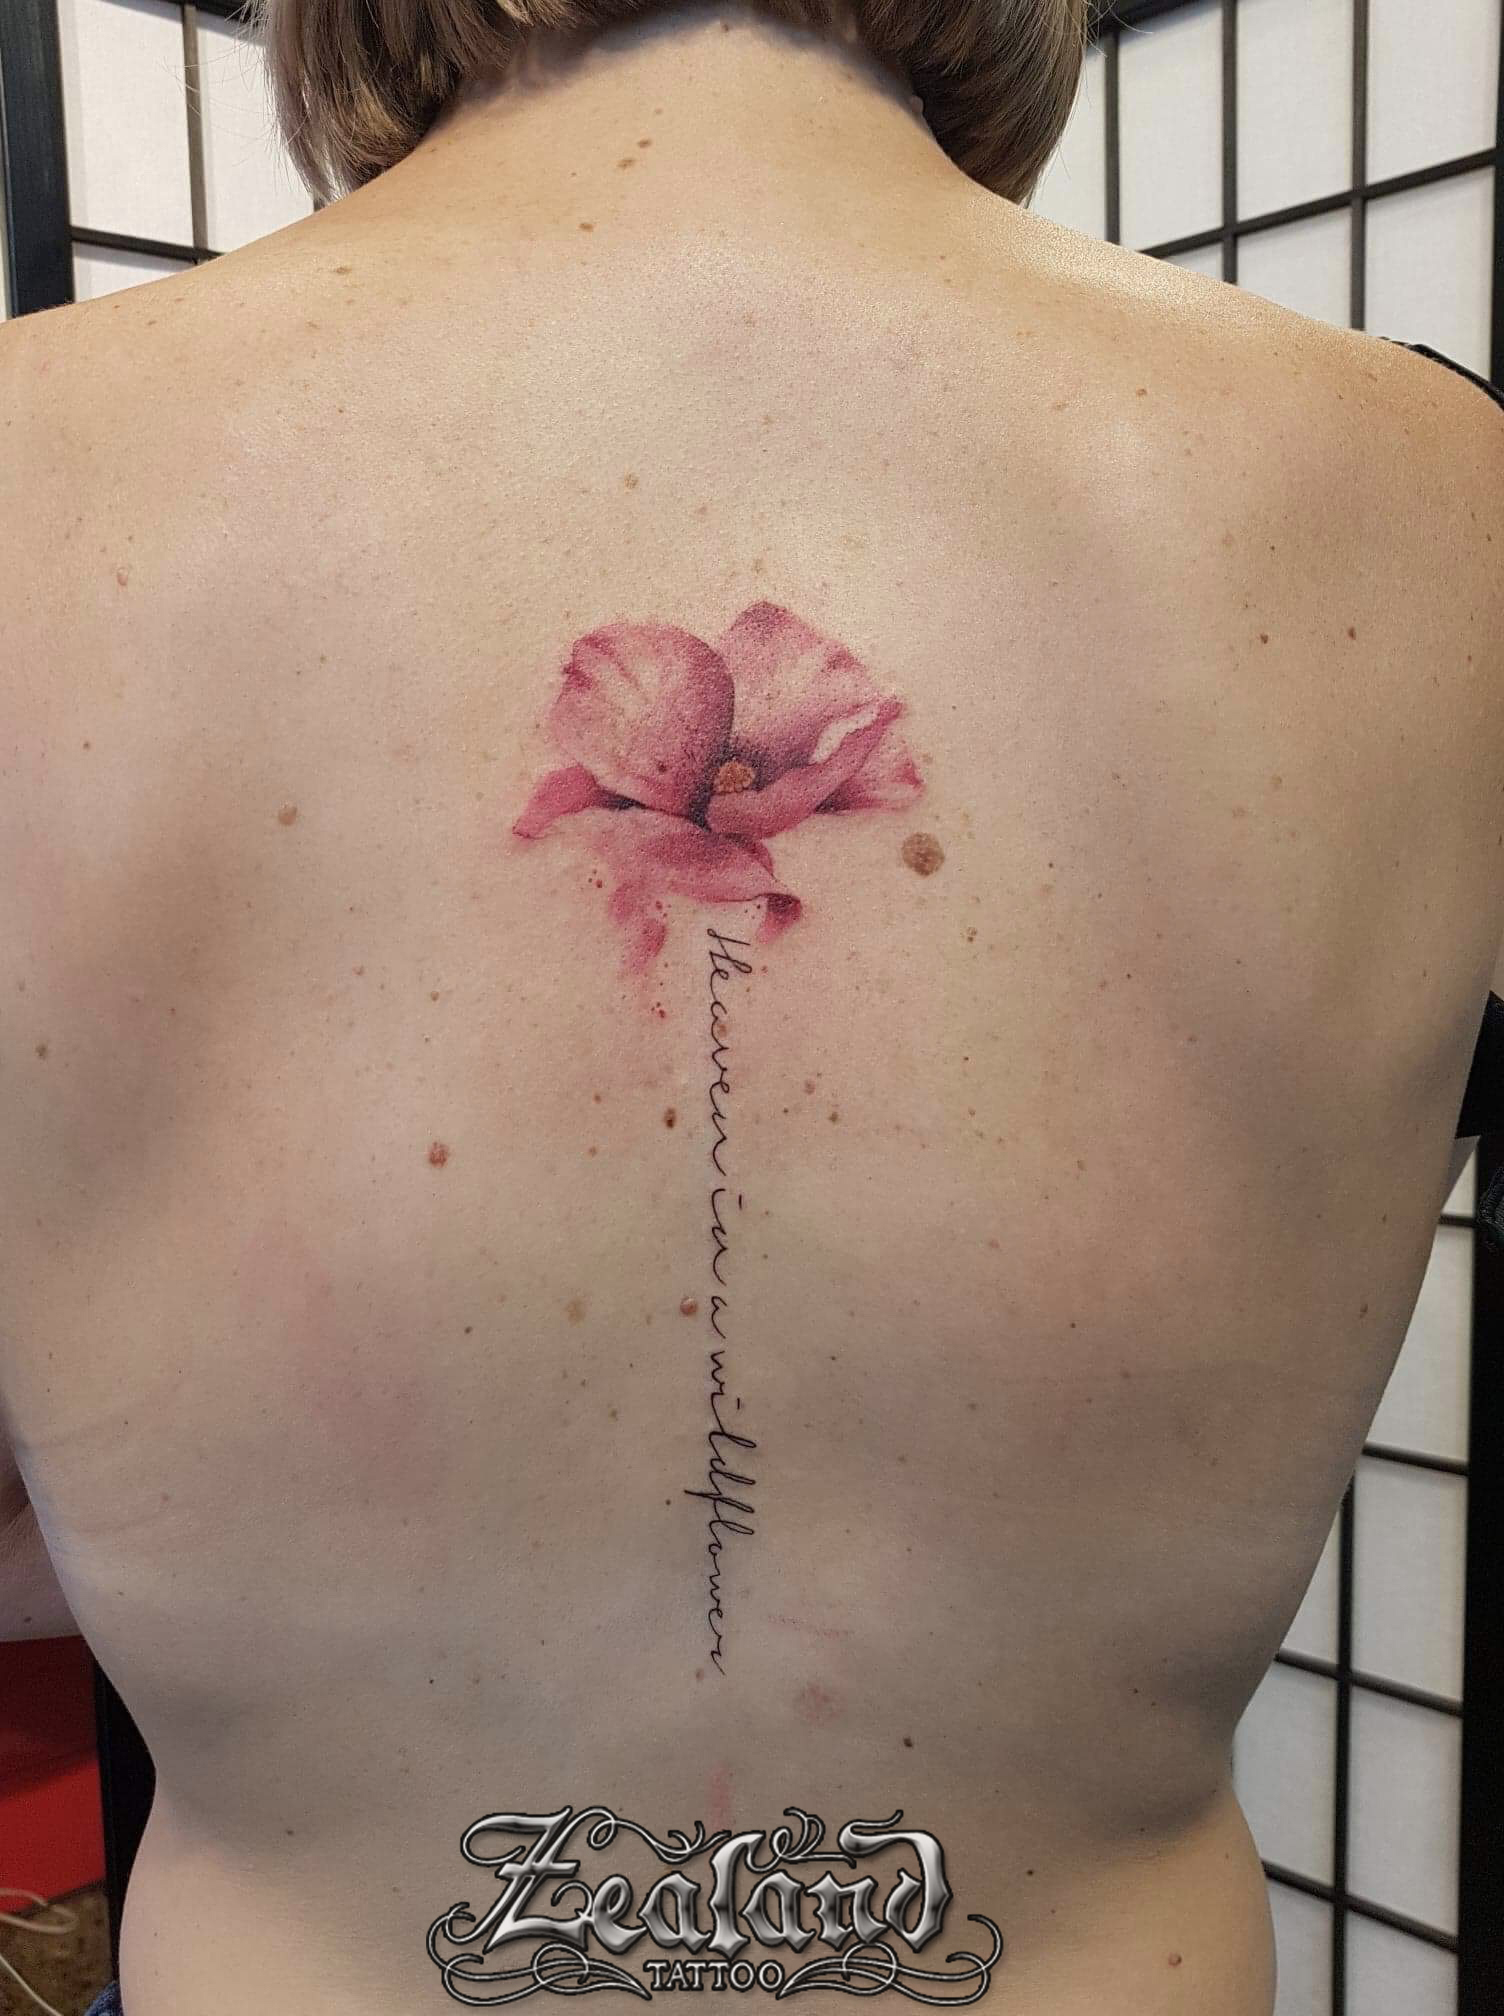 Tattoo for Spine - Etsy UK